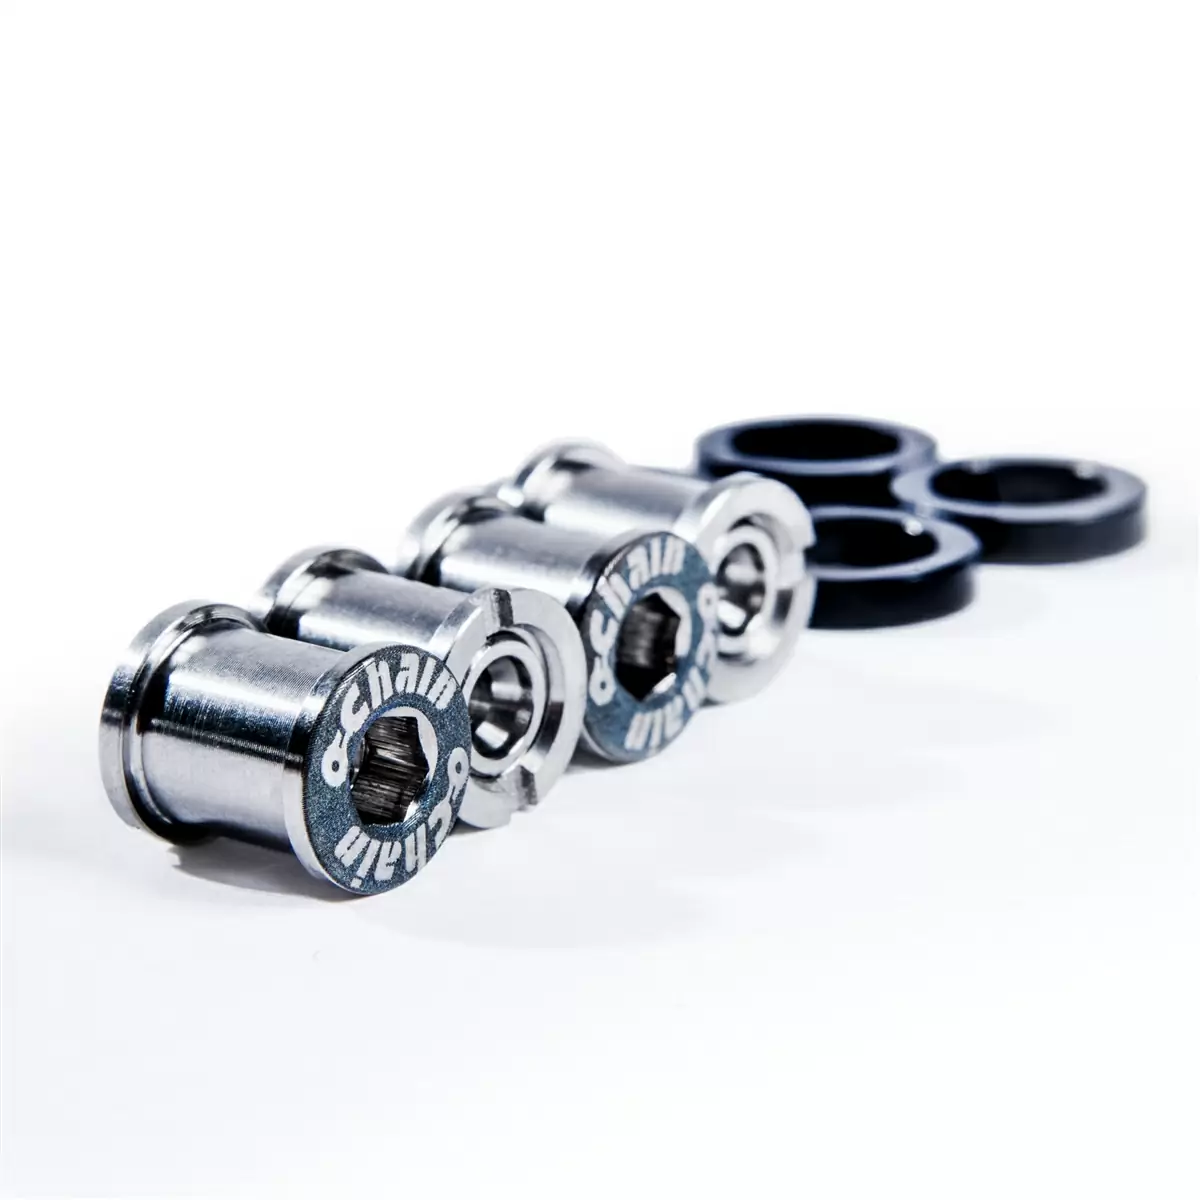 Chainring Bolt Kit -3mm Titanium 4pcs - image